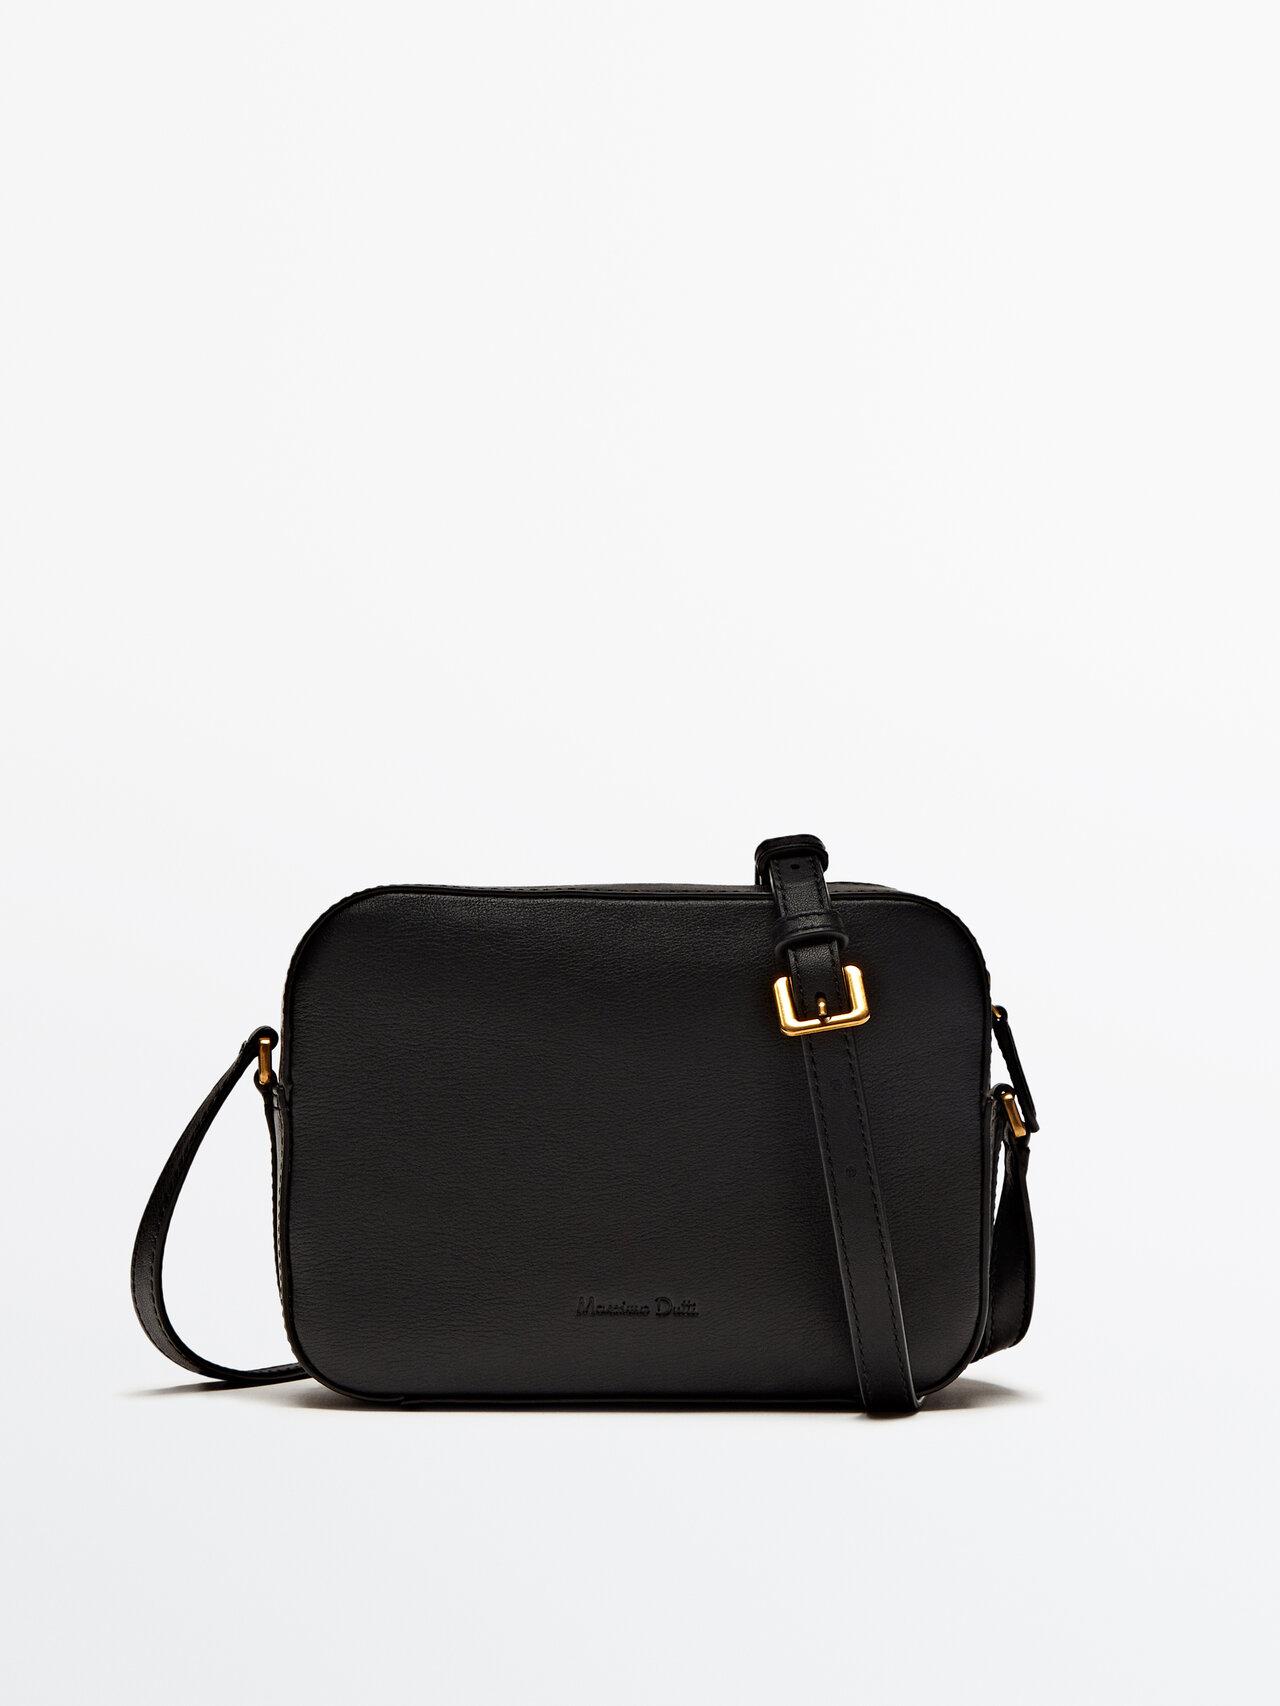 MASSIMO DUTTI Nappa Leather Camera Bag in Black | Lyst